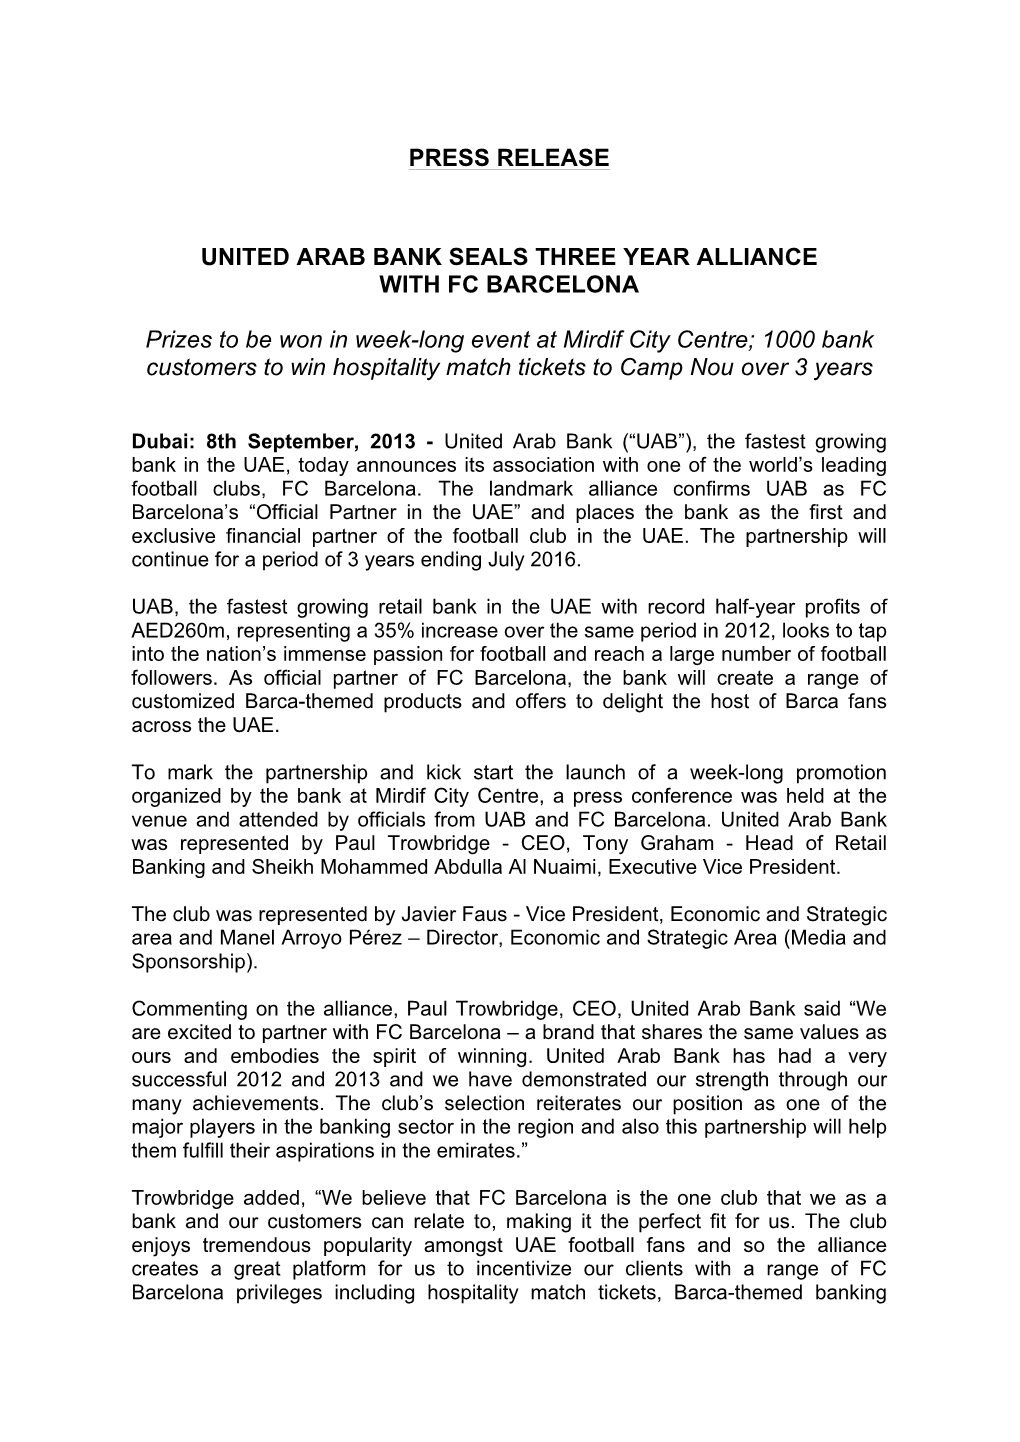 Press Release United Arab Bank Seals Three Year